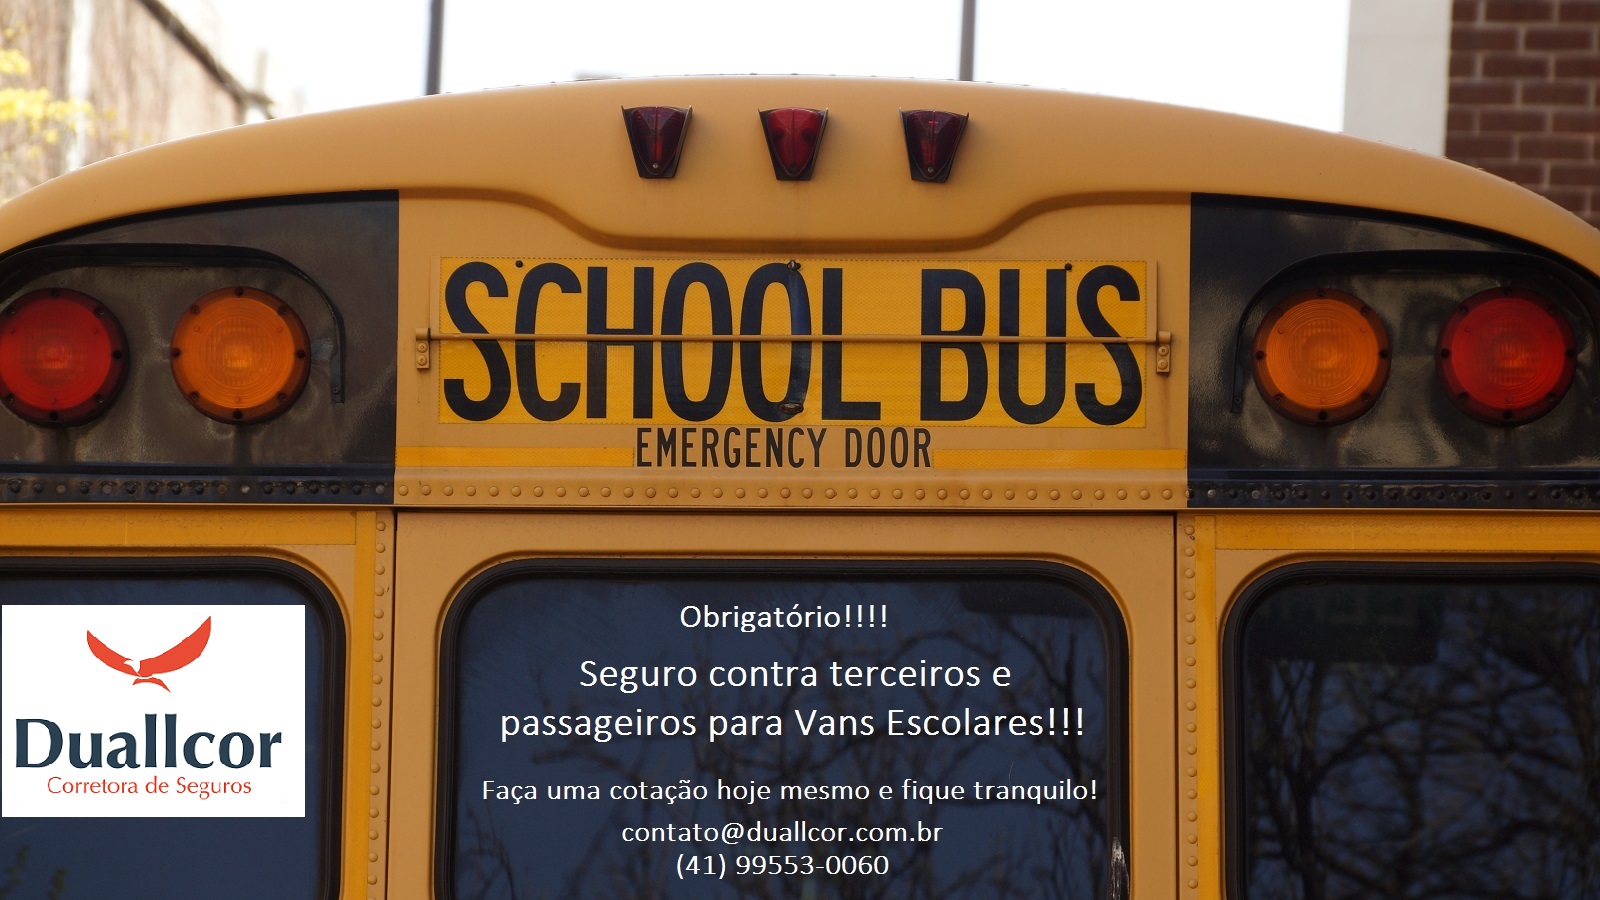 bus-school-school-bus-yellow-1596581